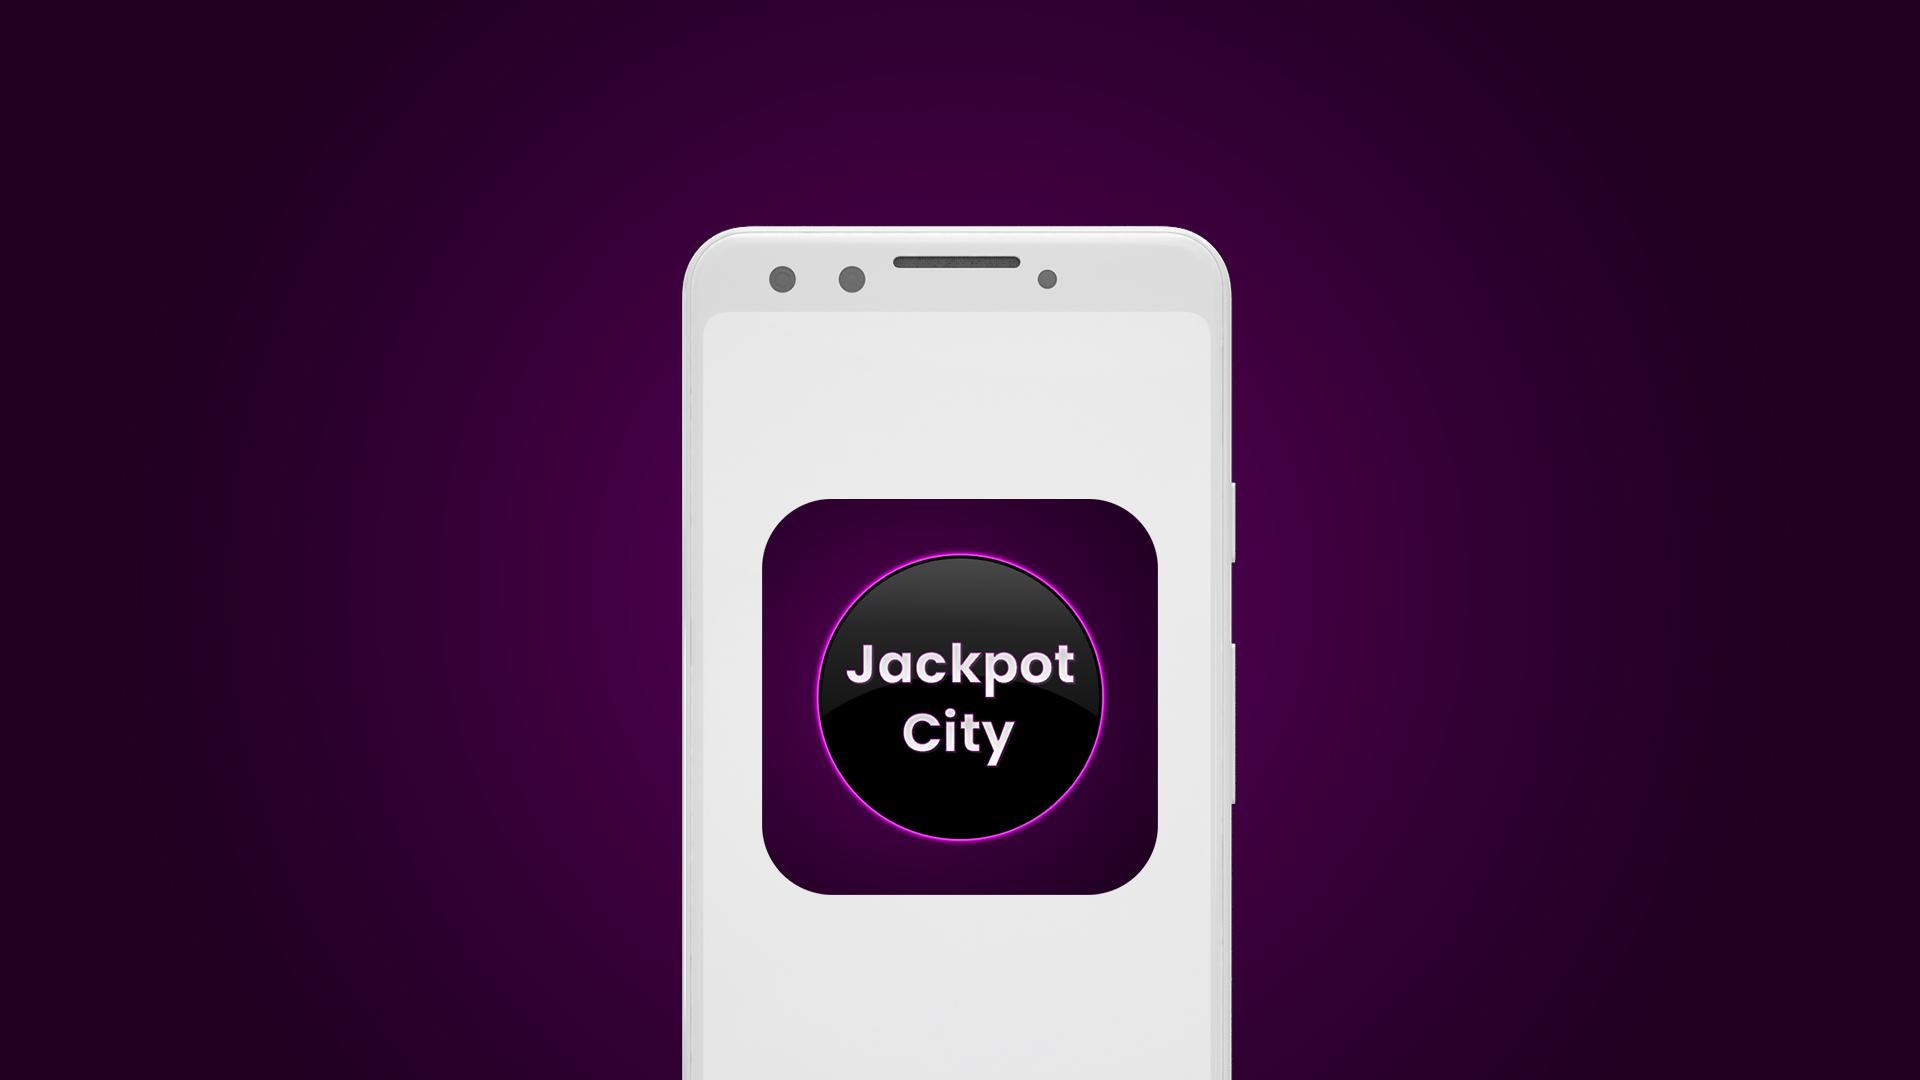 Jackpot city android